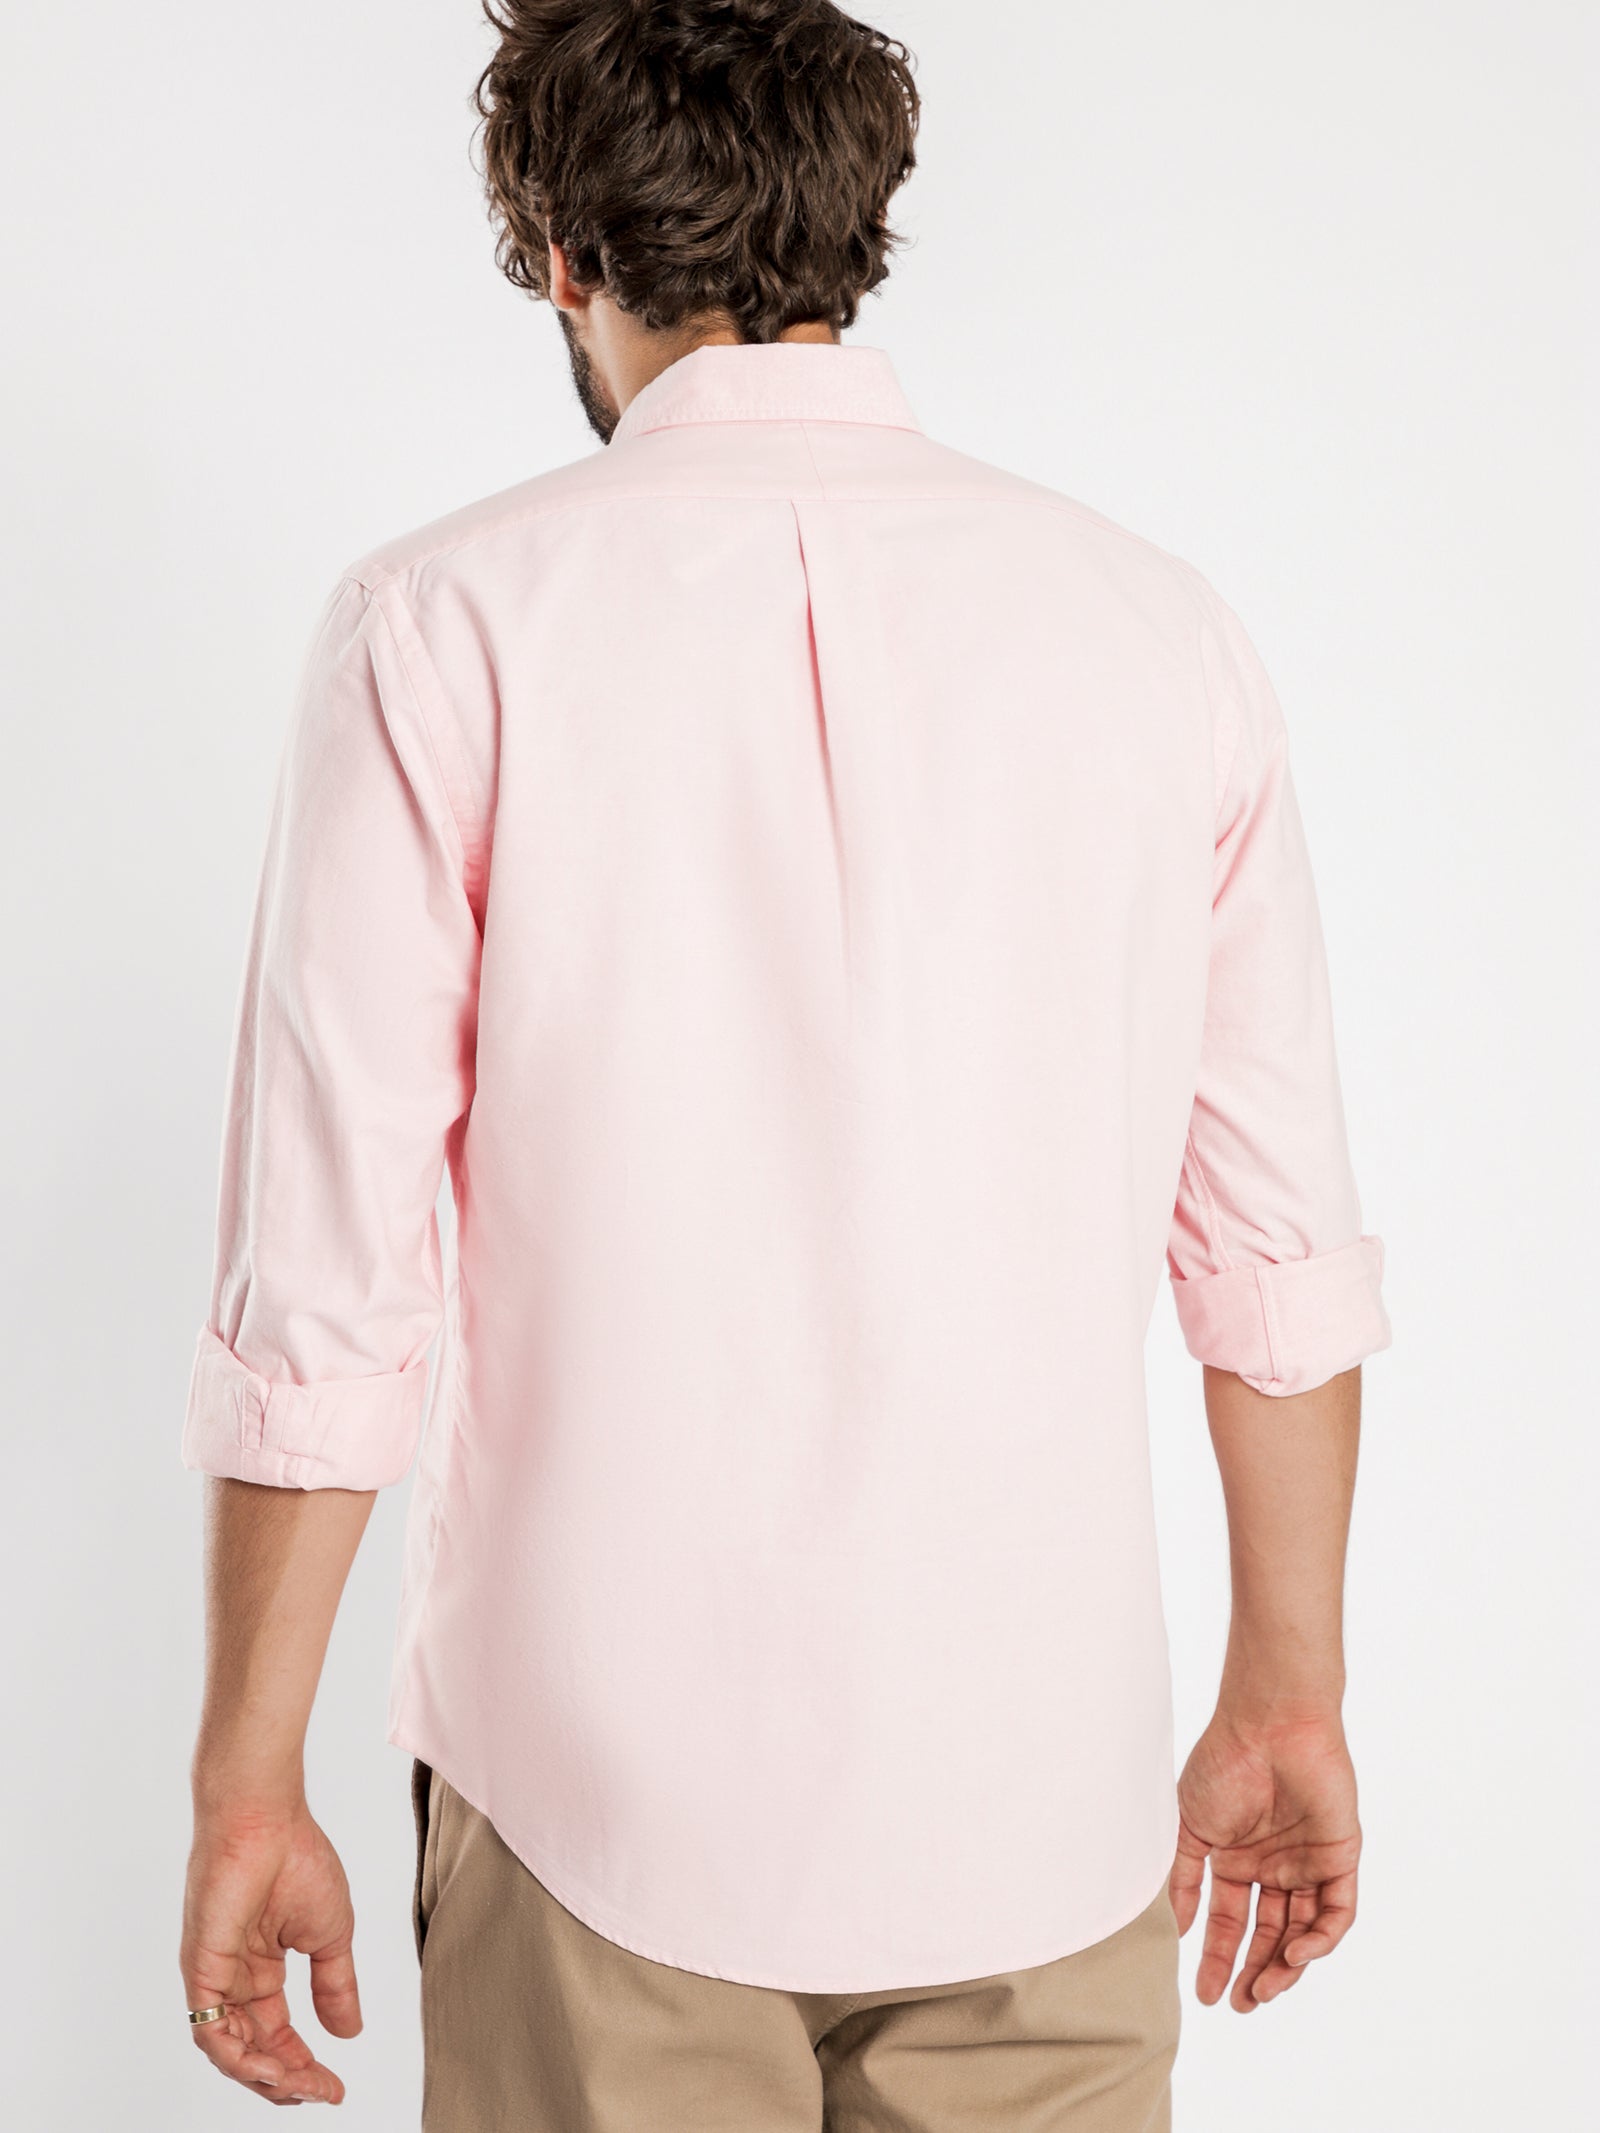 Standard Fit Oxford Sport Shirt in Pink - Glue Store